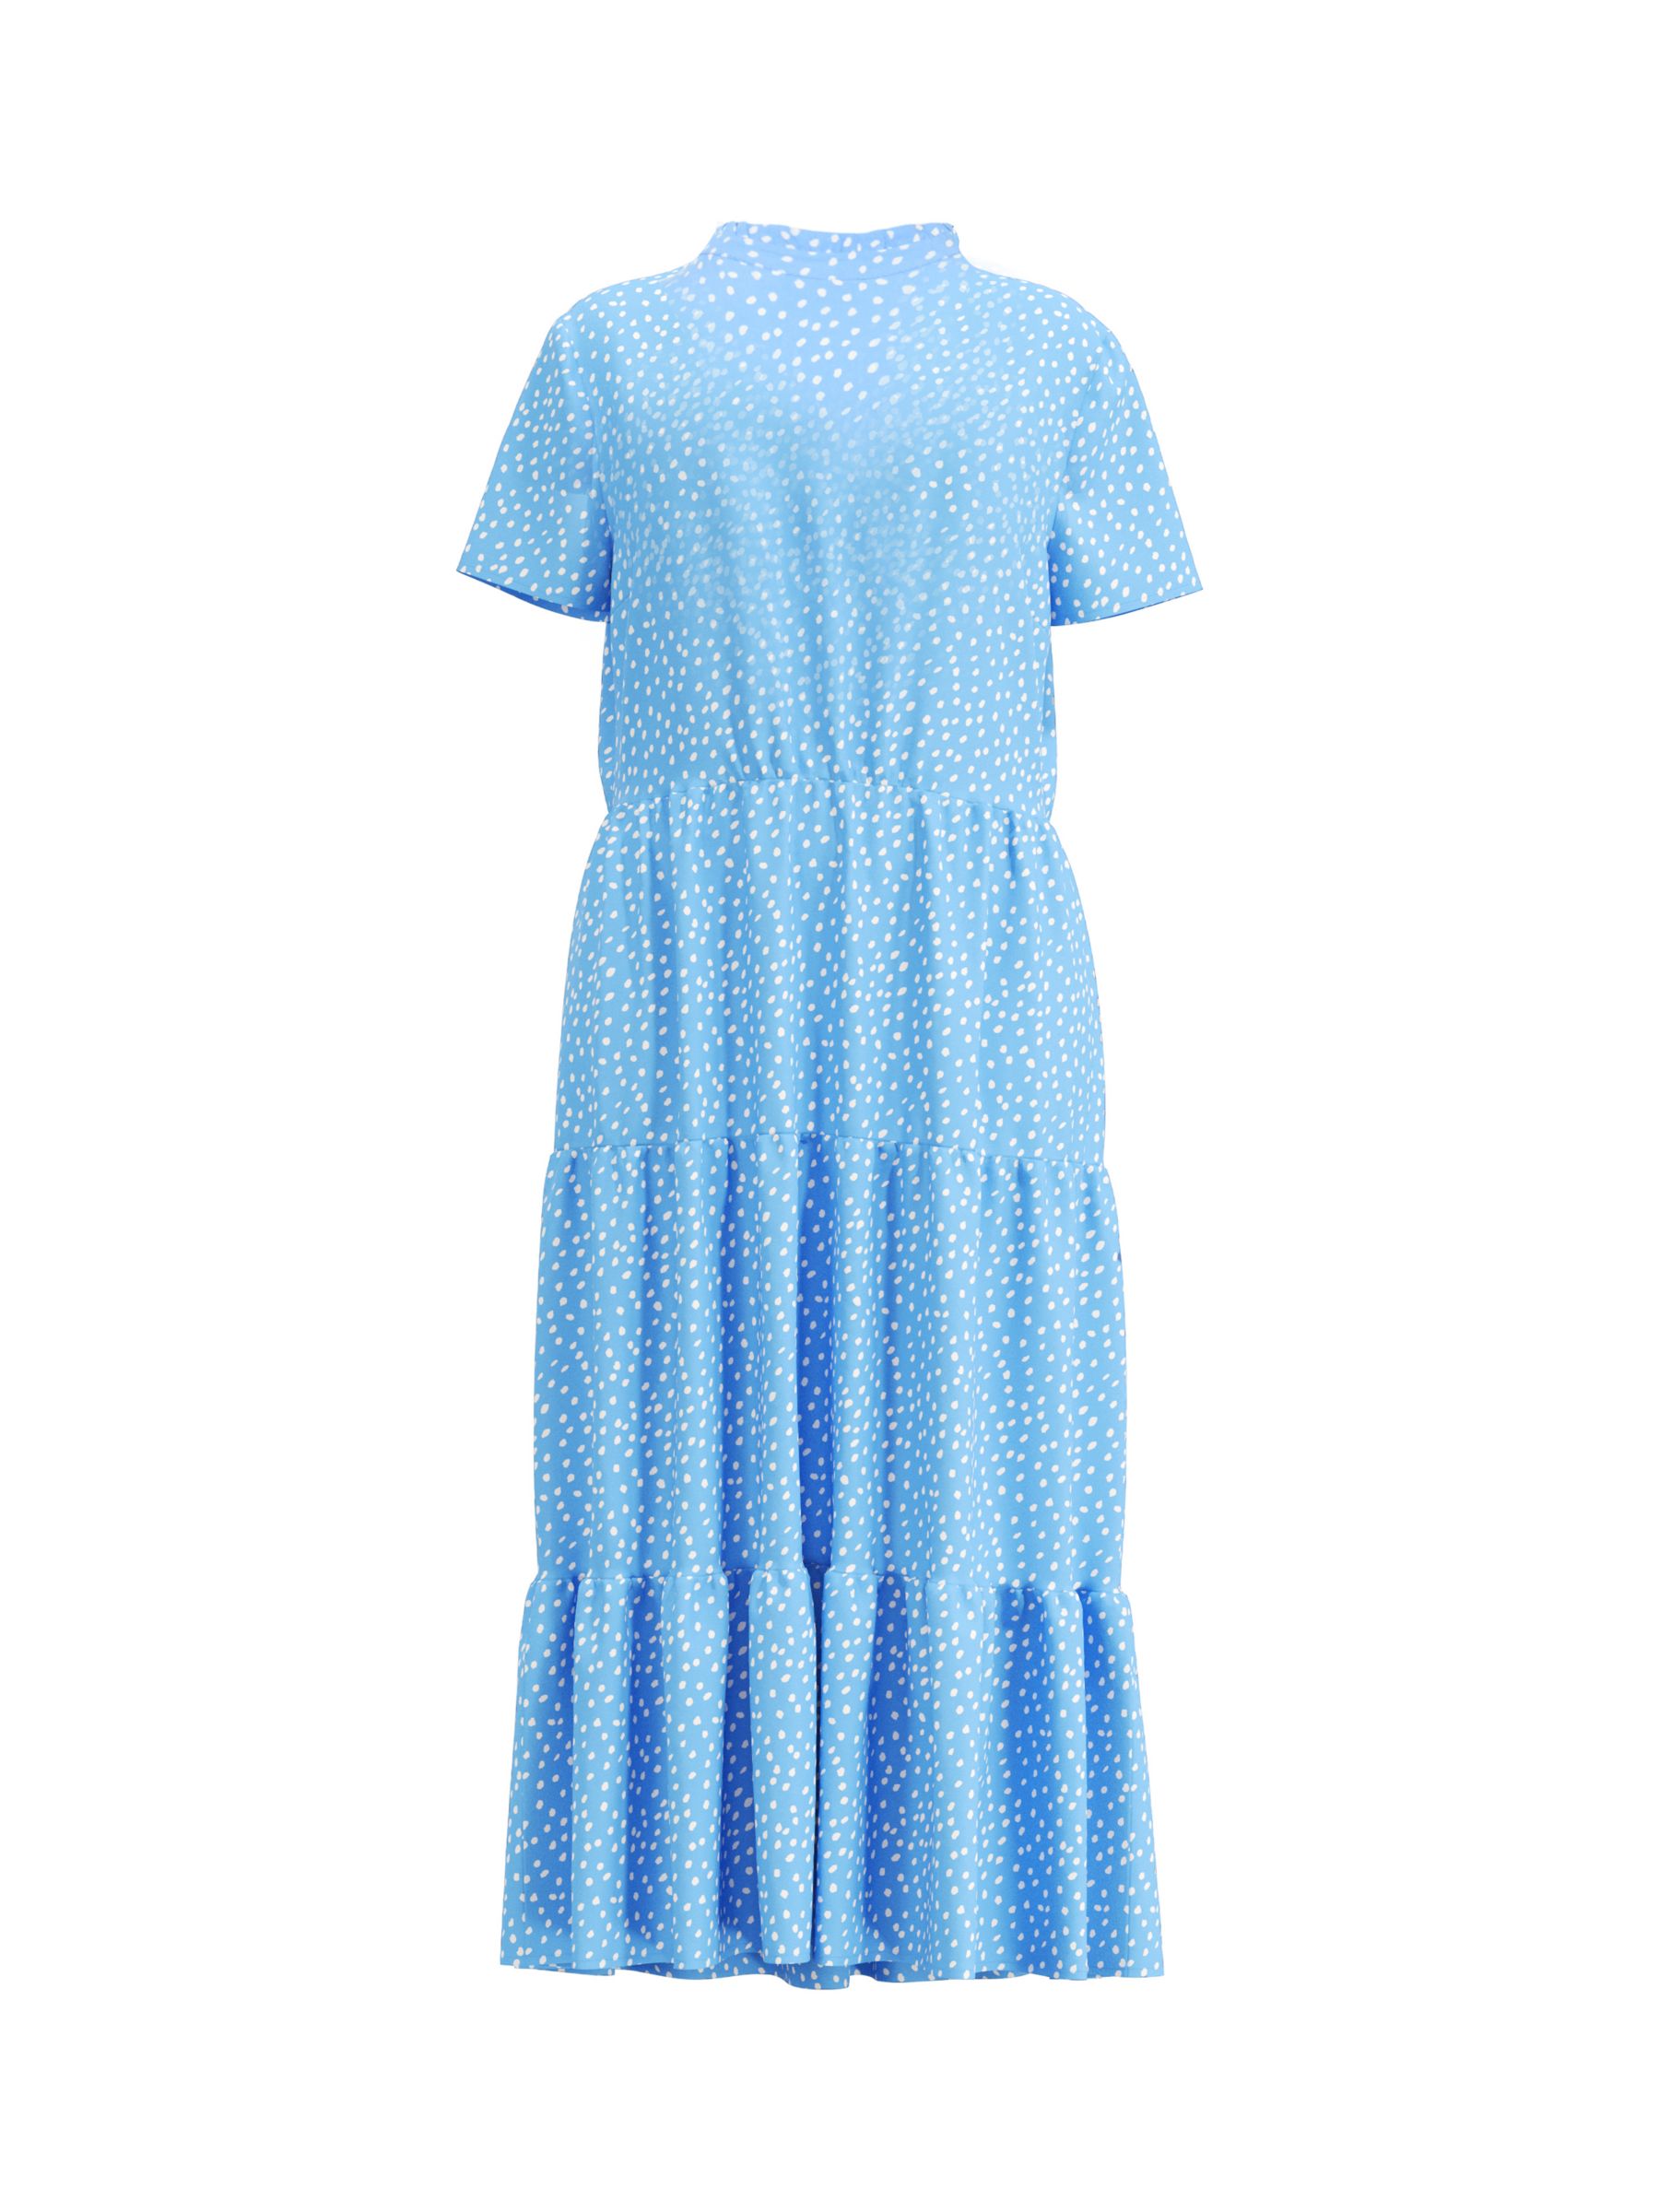 Saint Tropez Eda Ditsy Spot Print Tiered Midi Dress, Blue/White, XS